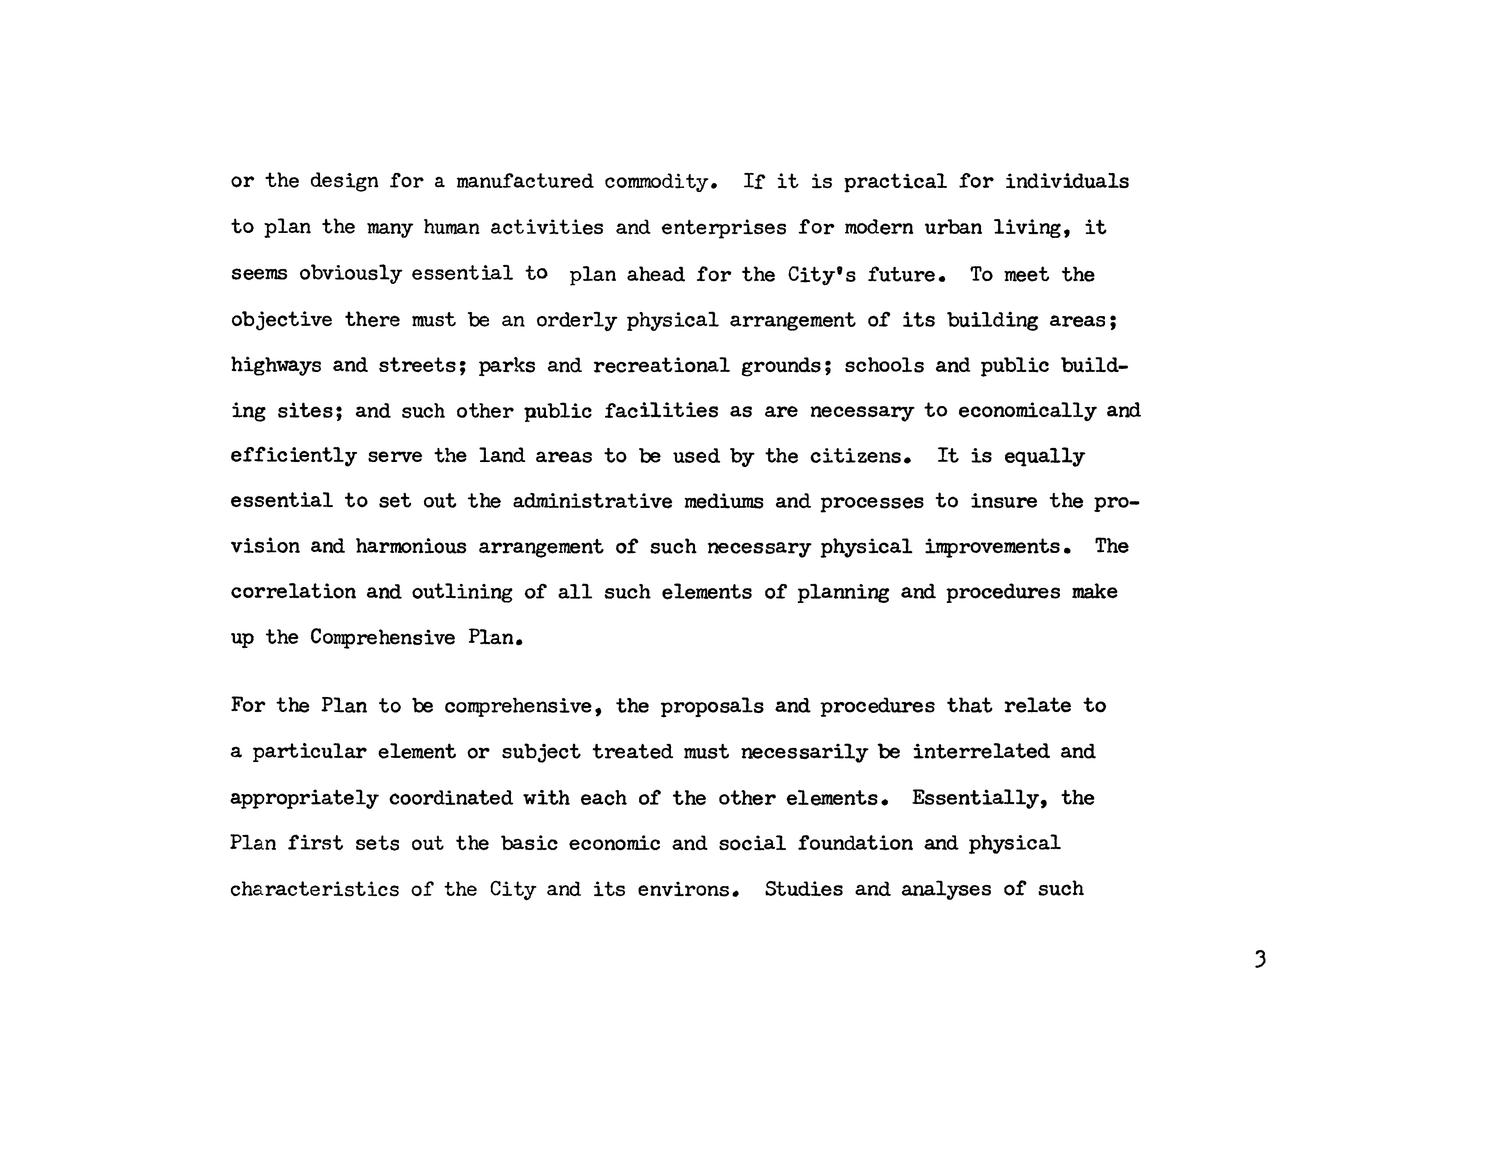 Comprehensive Plan for Denton, Texas, 1960-1985: [Volume 1]. Phase 1 Basic Studies
                                                
                                                    3
                                                